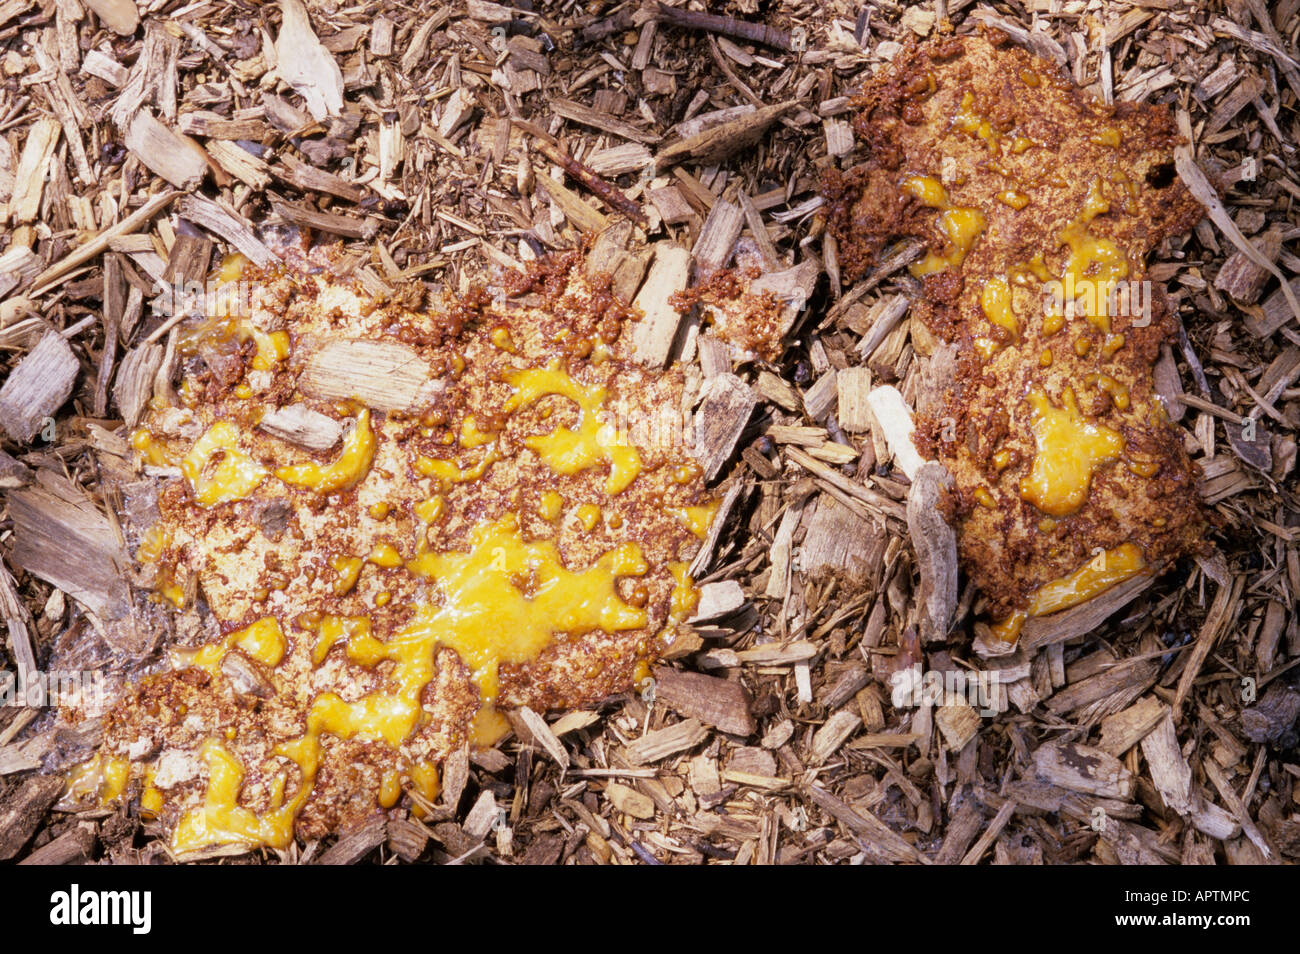 Dog vomit slime mold (Fuligo septica) in an urban flower bed.  Missouri, USA. Stock Photo